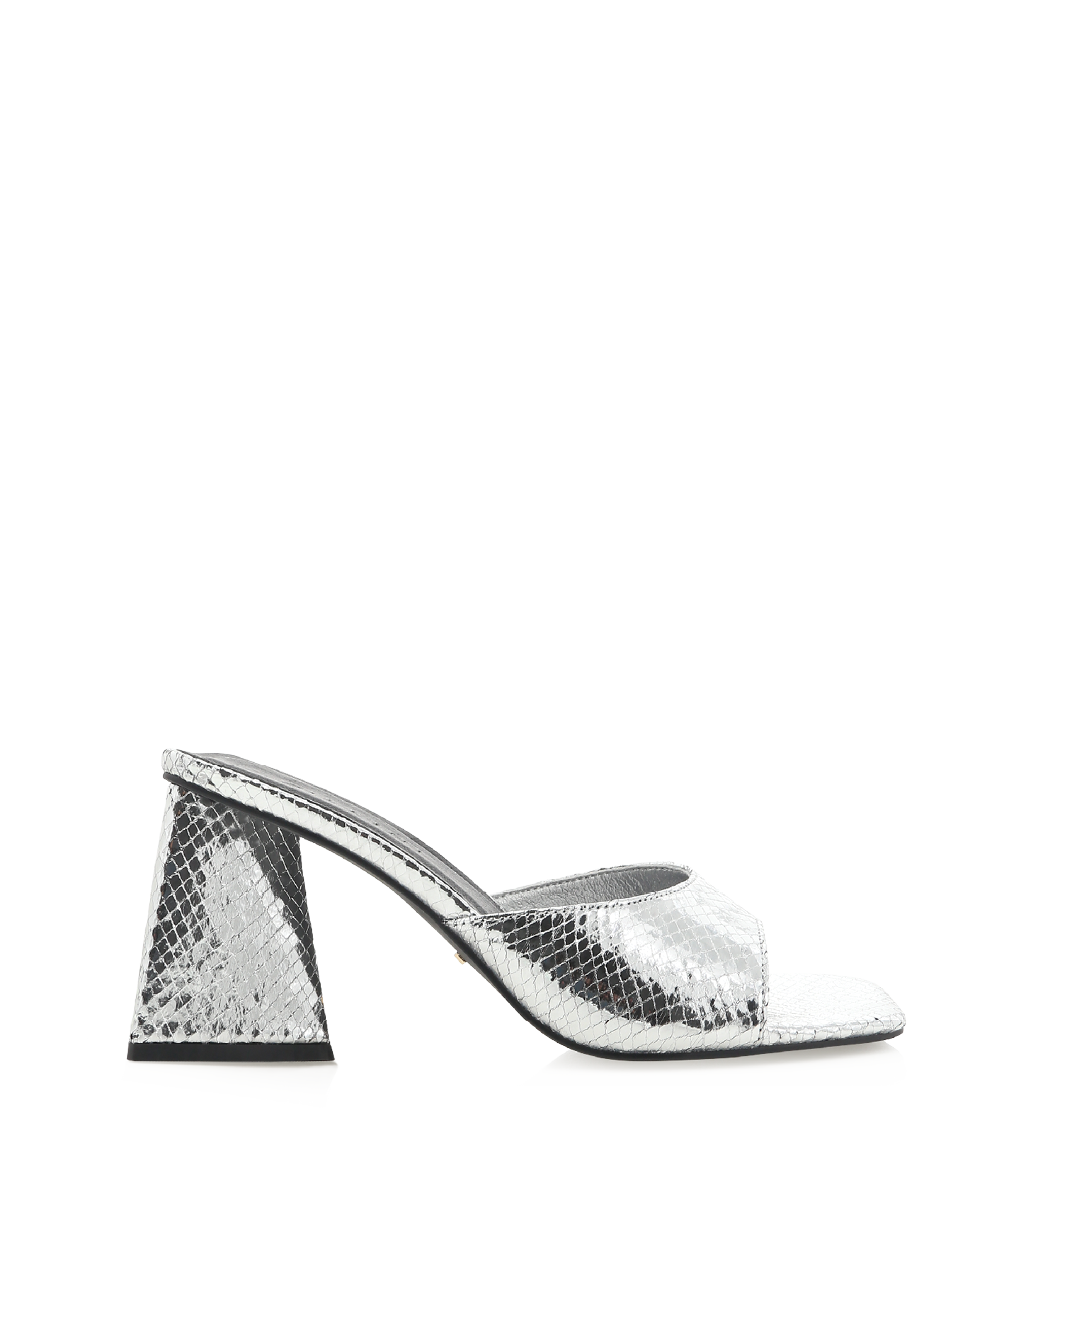 New Look Shiny Purple Silver High Heels New Size 4 | eBay